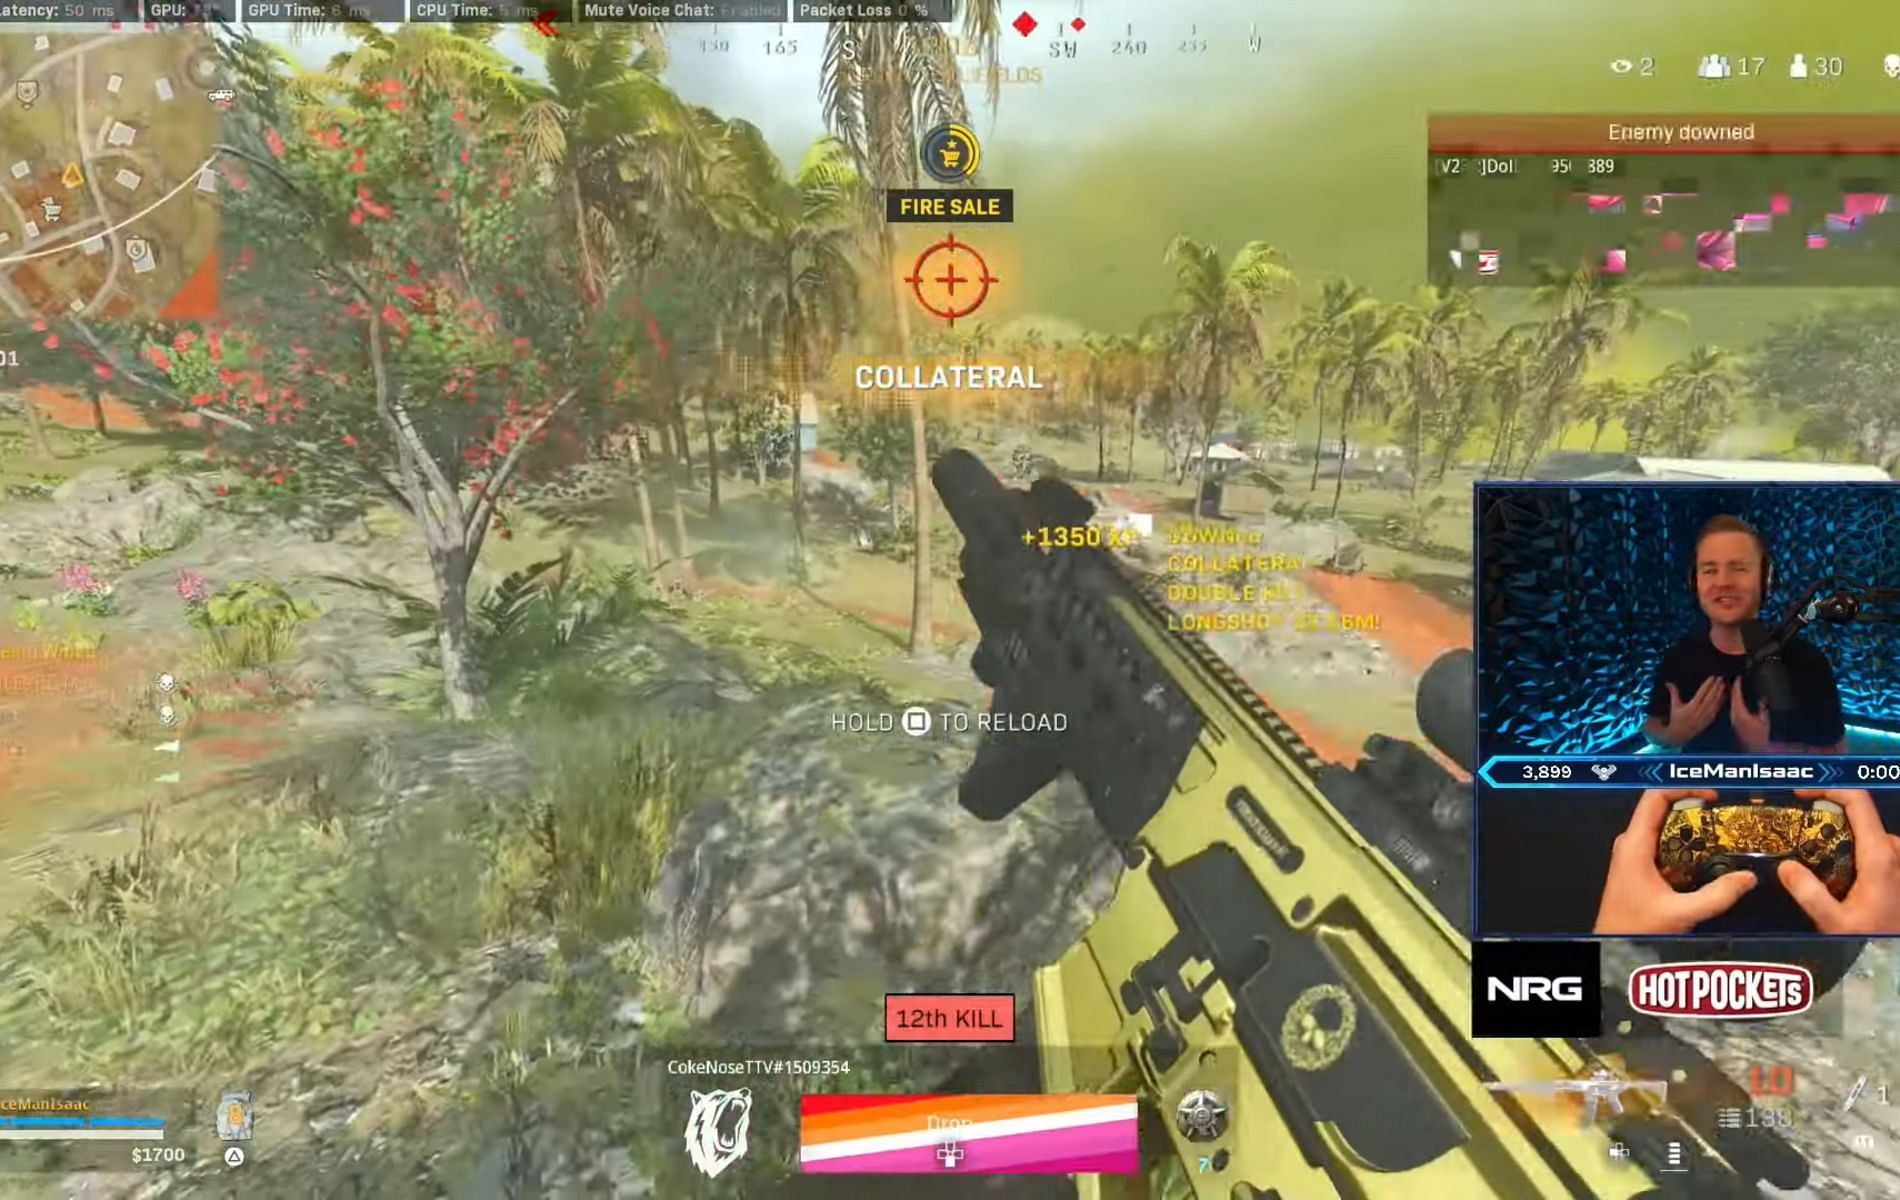 Call of Duty Warzone M13 (image via YouTube/IceManIssac)